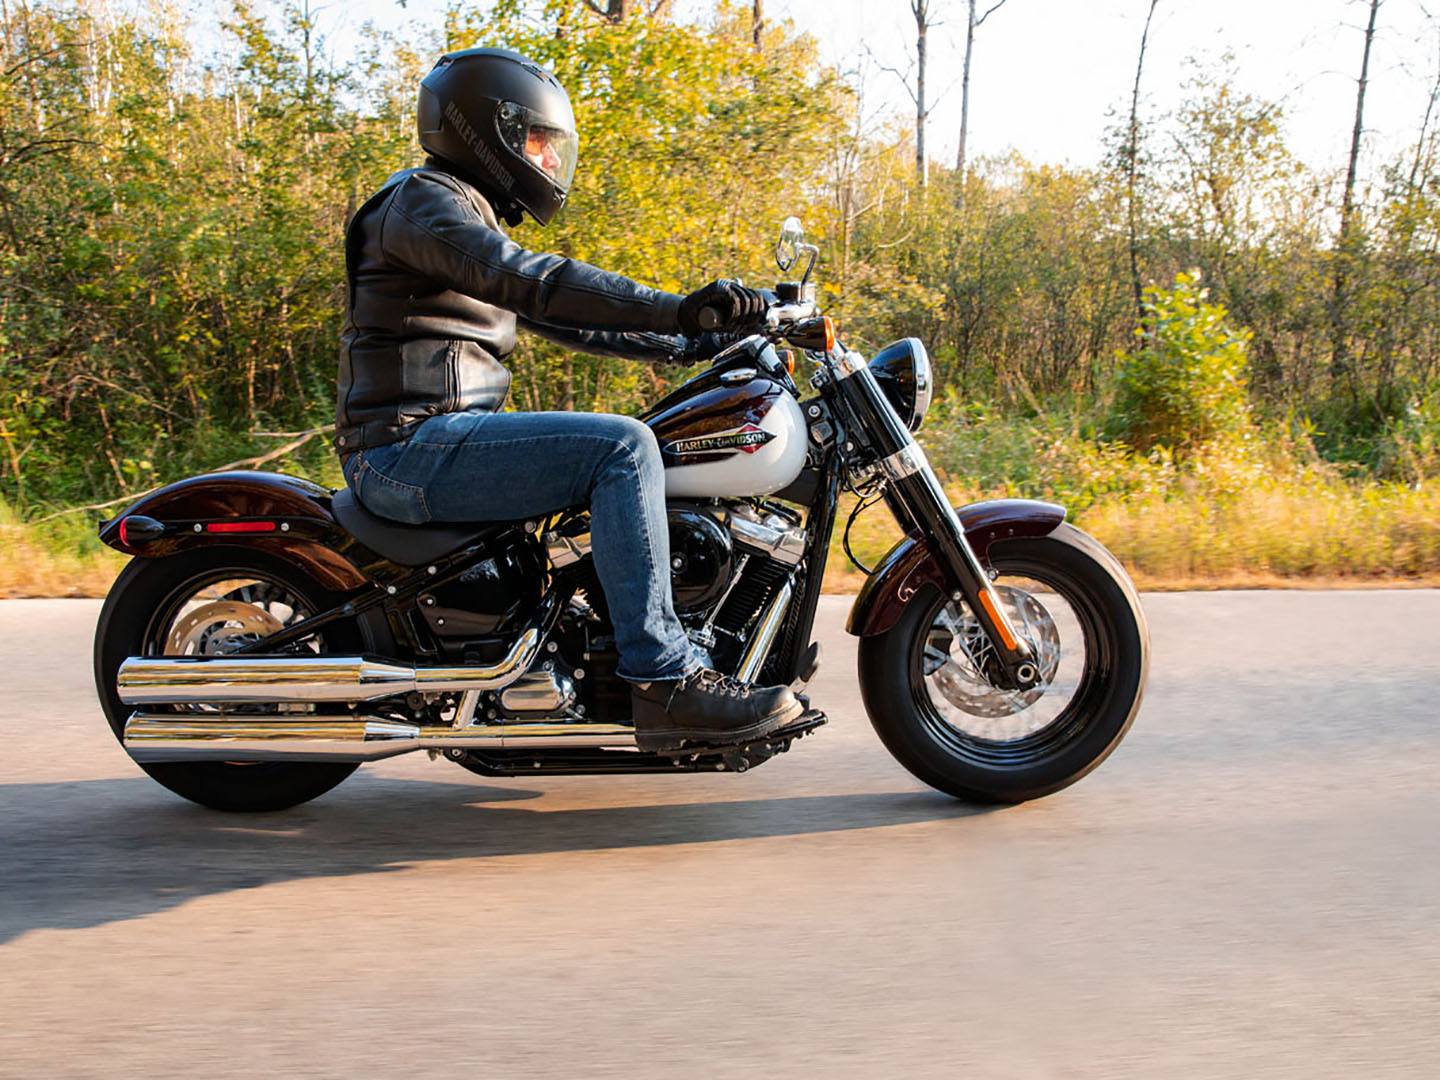 2021 Harley-Davidson Softail Slim® in Leominster, Massachusetts